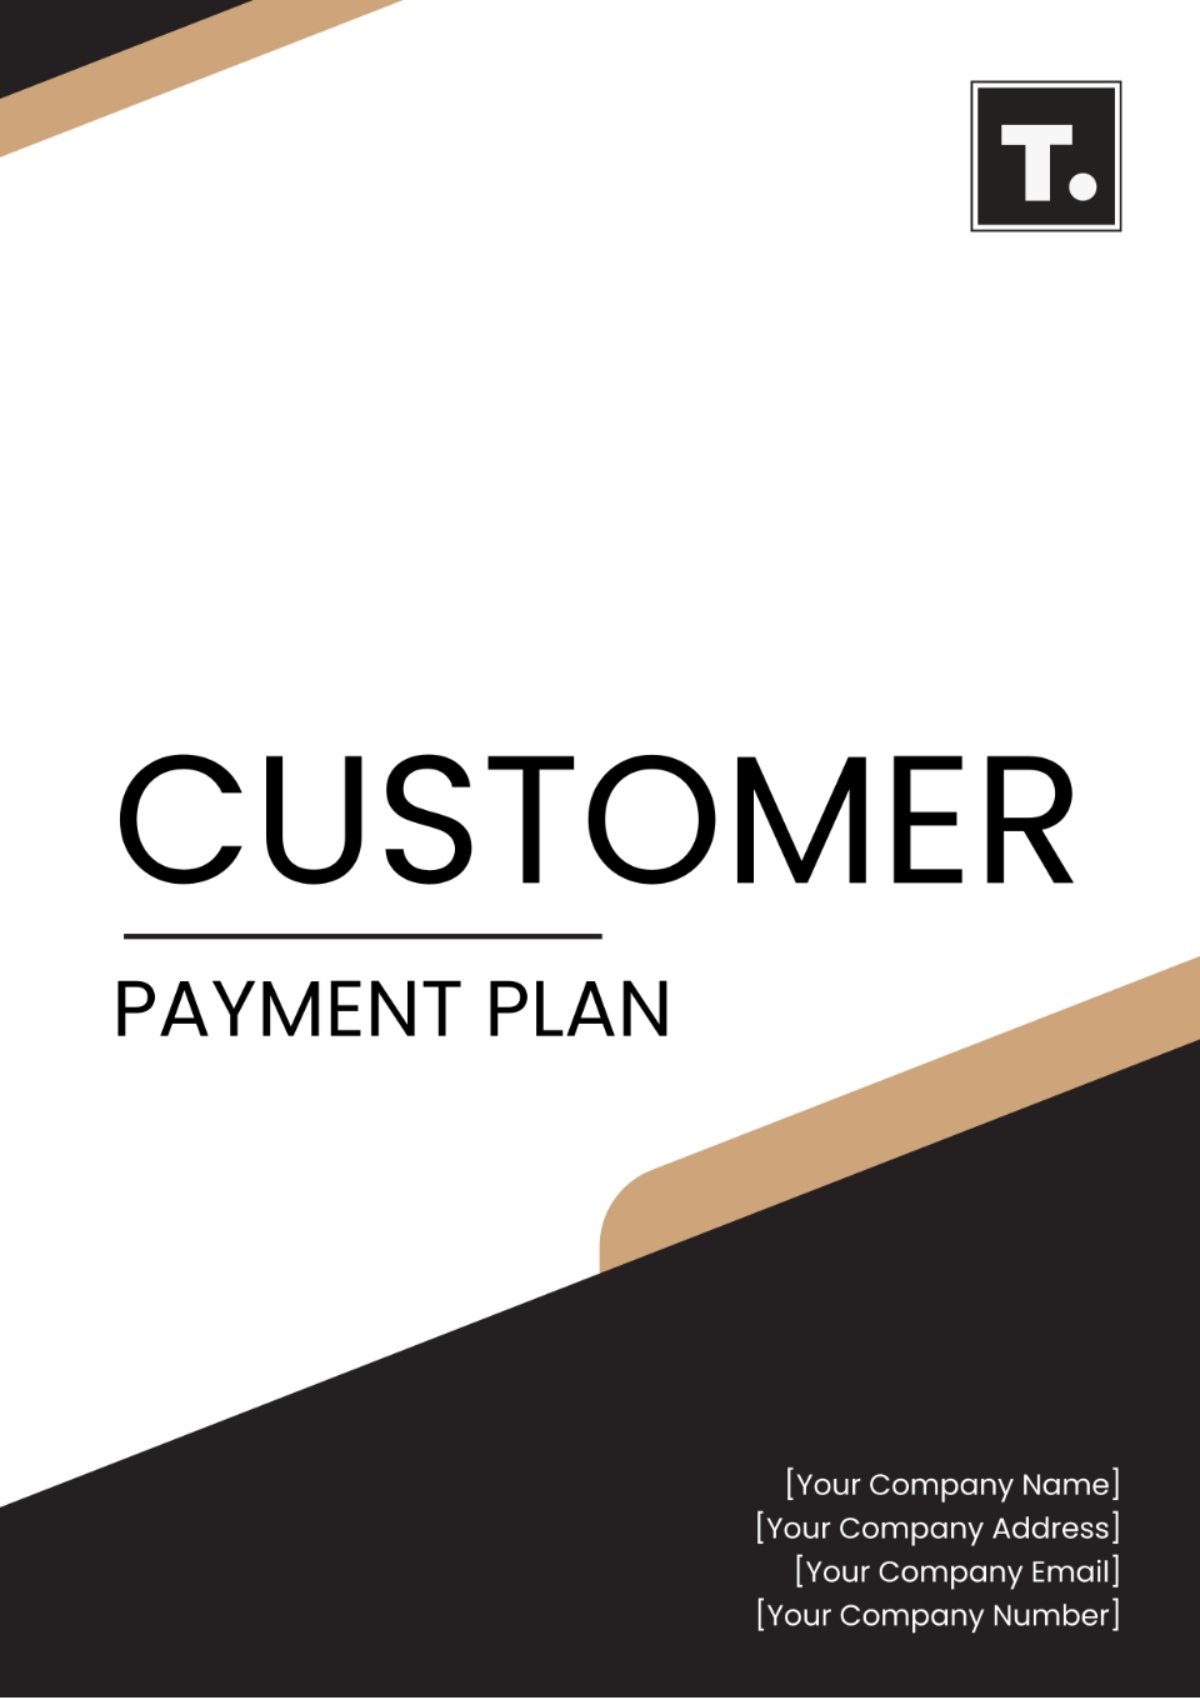 Customer Payment Plan Template